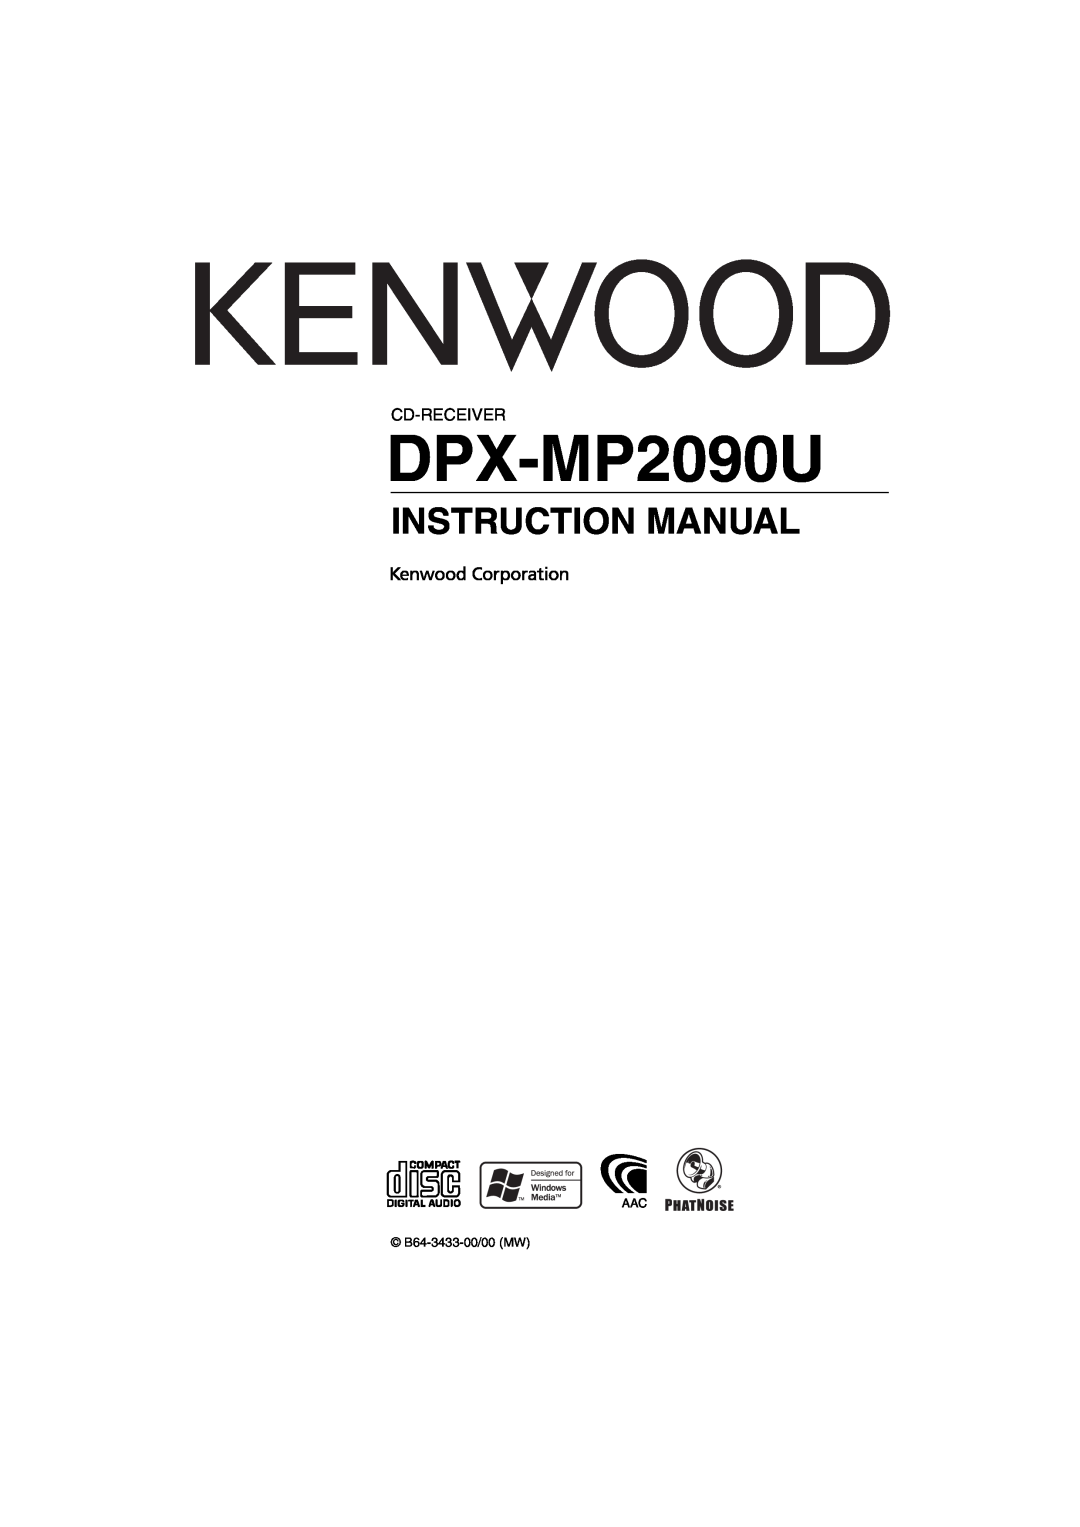 Kenwood DPX-MP2090U instruction manual Cd-Receiver, B64-3433-00/00MW 